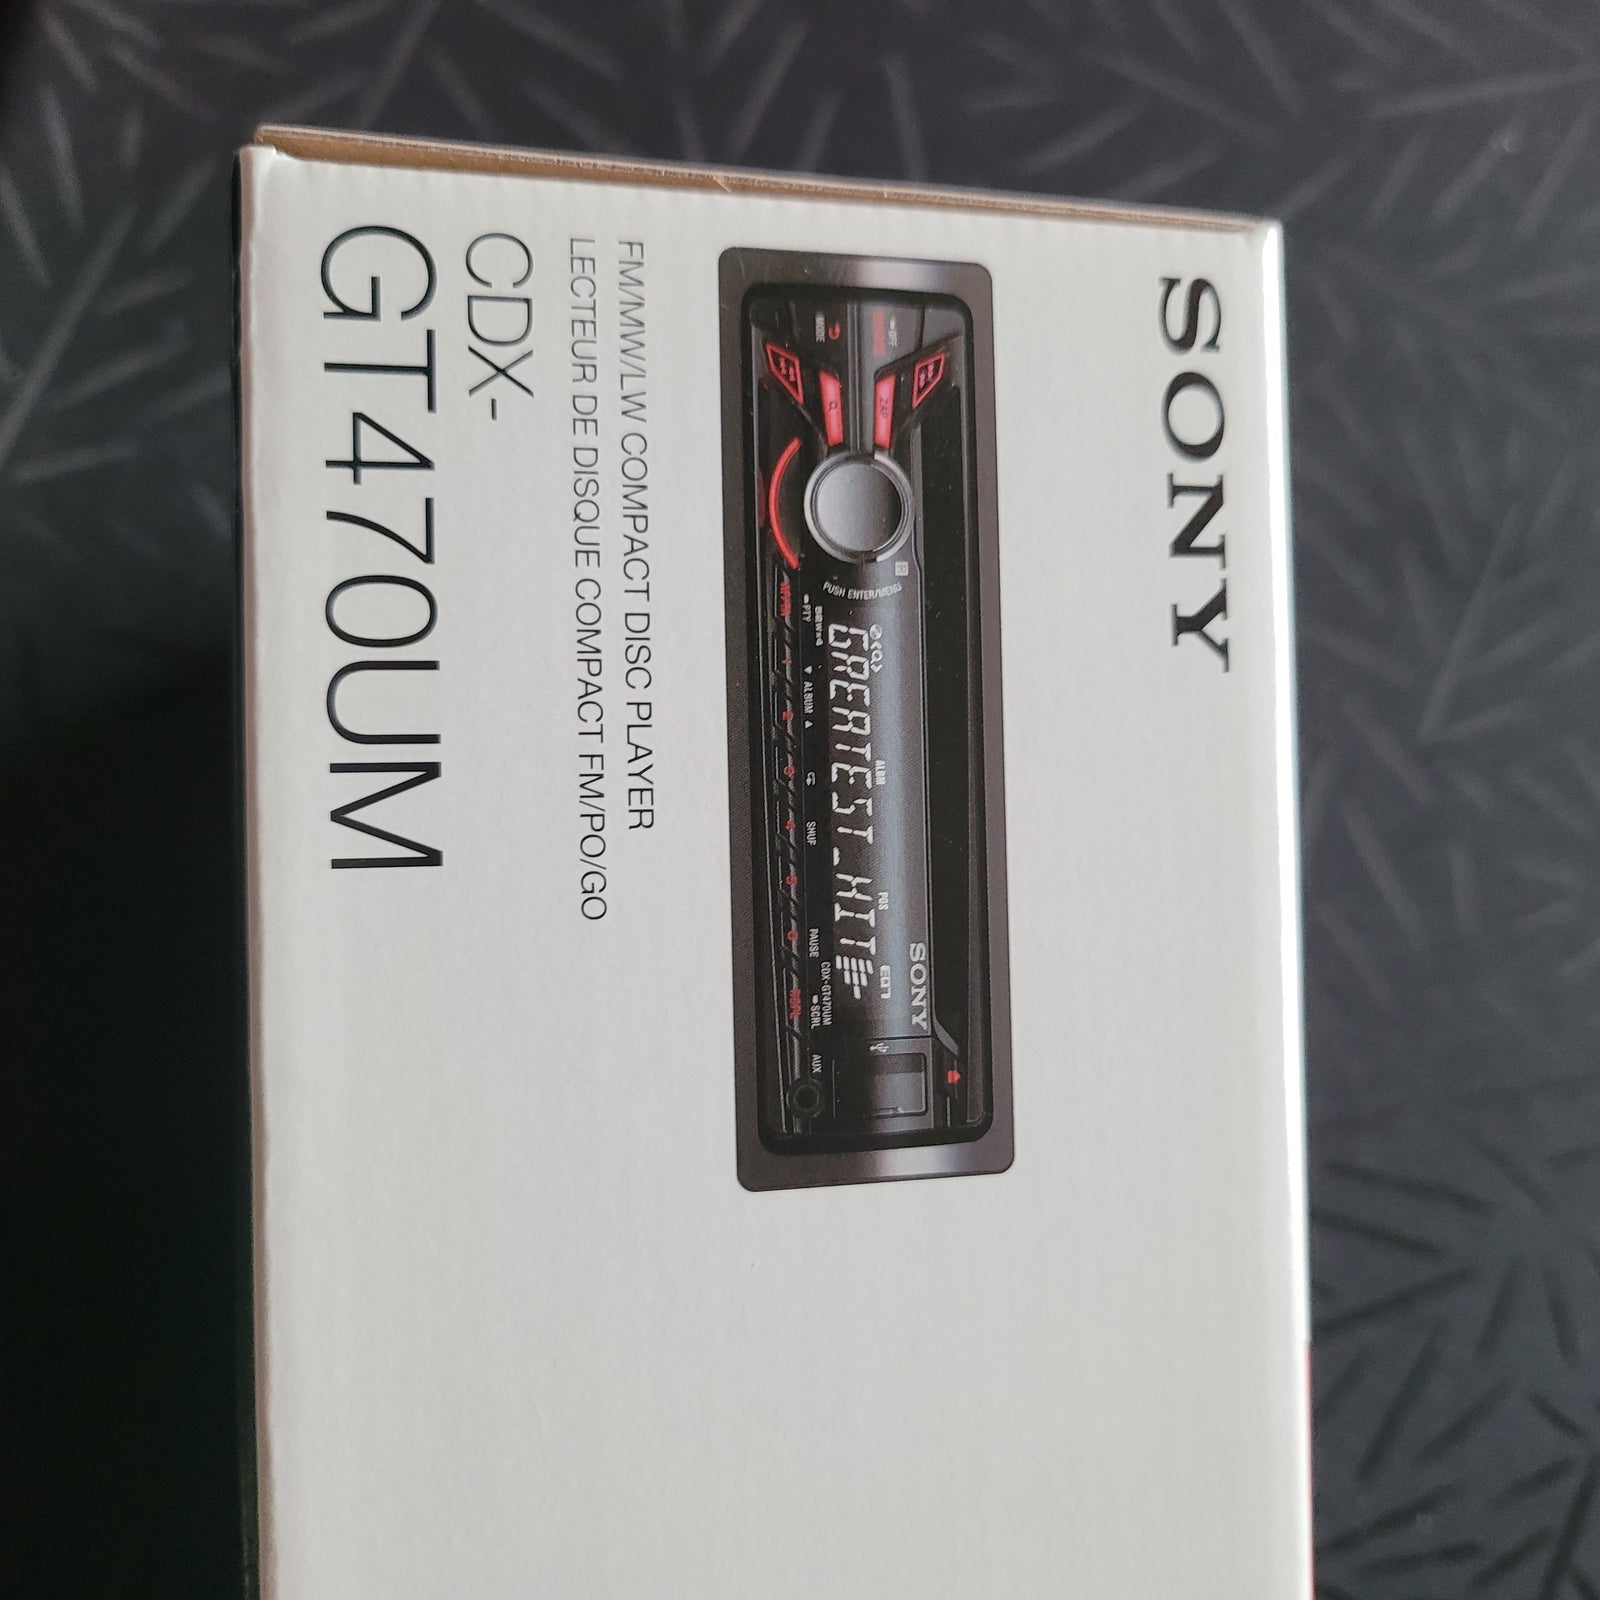 Sony CDX-GT470UM, CD/Radio